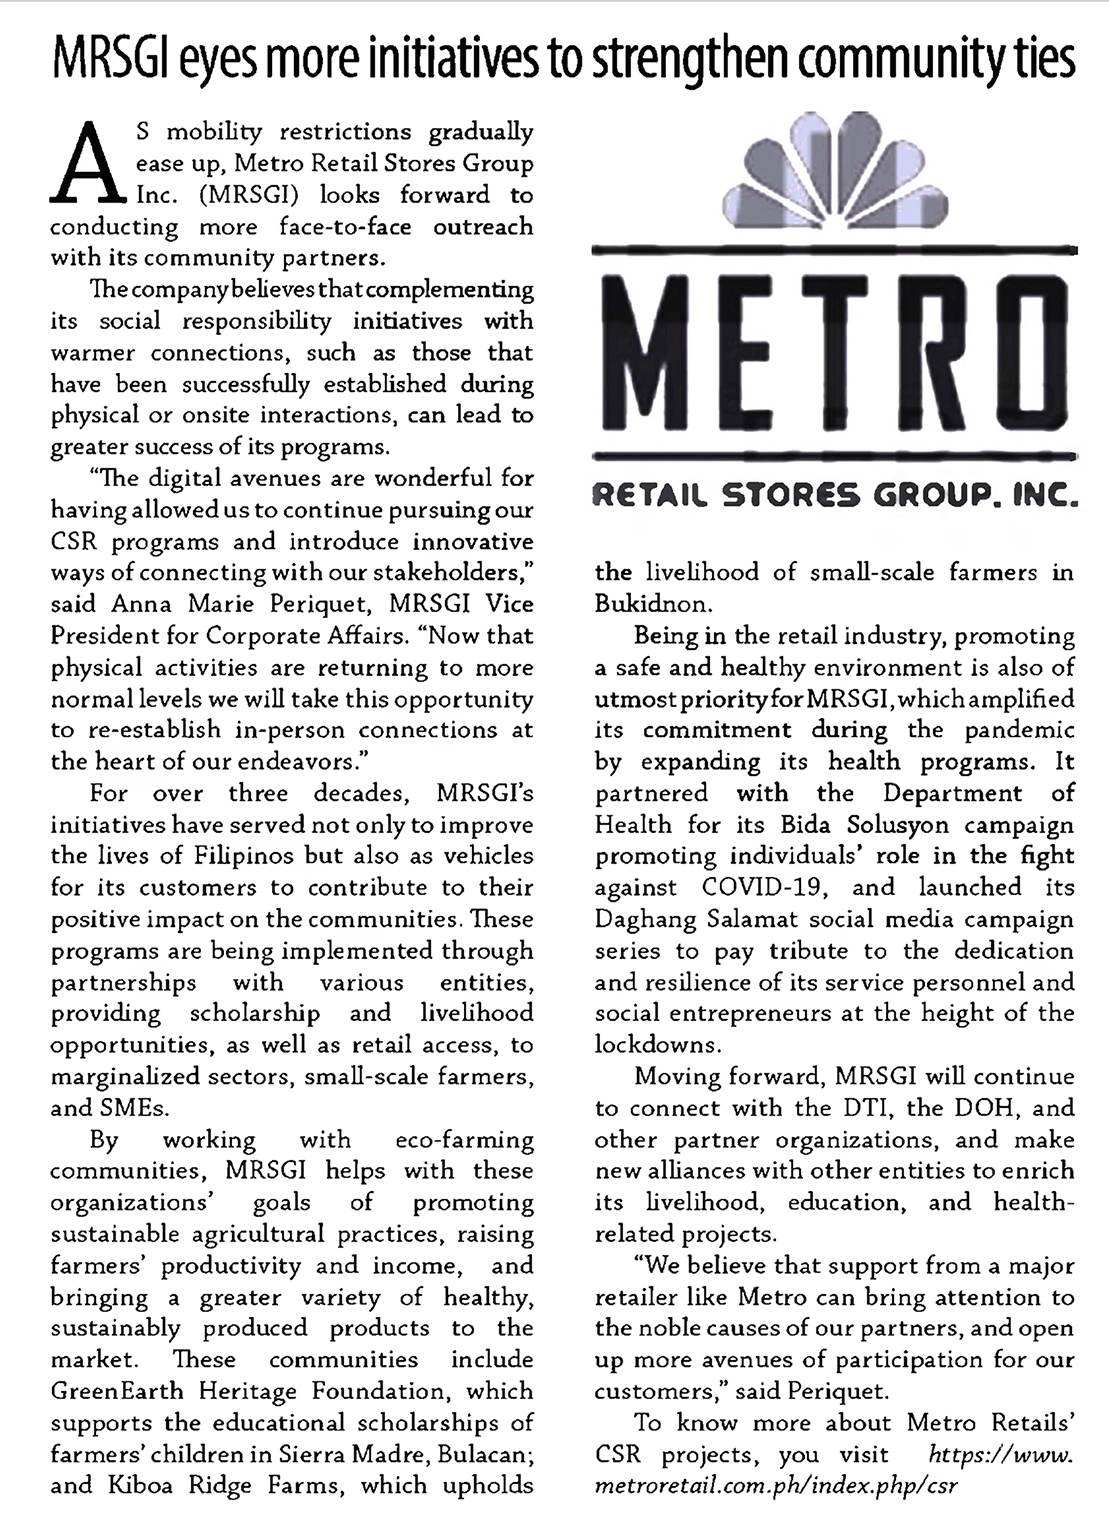 Feb 23 2022 MRSGI eyes more initiatives to sthrengthen community ties Business Mirror